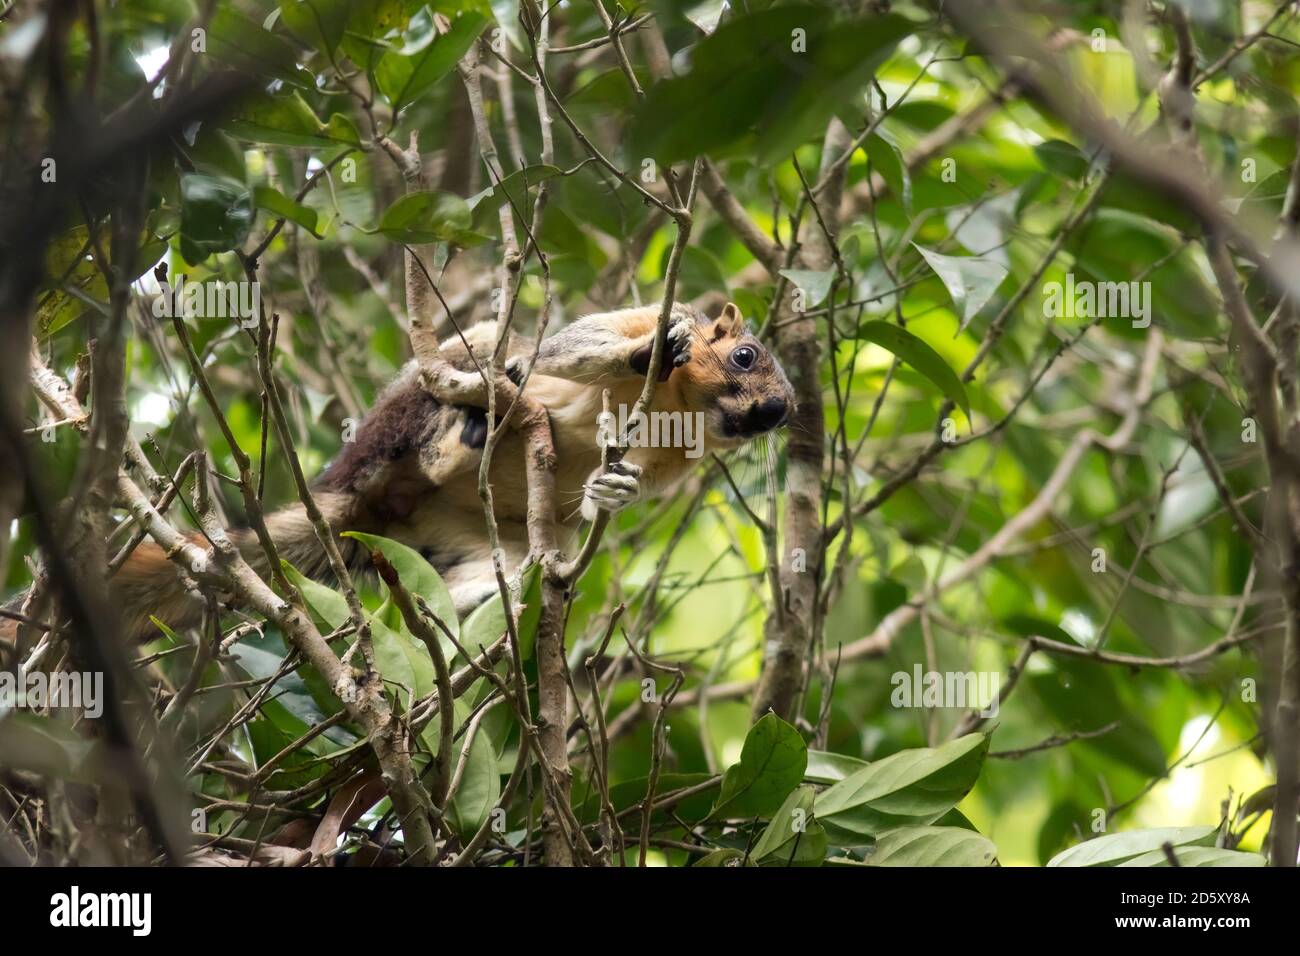 Malaysia, Borneo, Sepilok, cream-coloured giant squirrel perching on branch Stock Photo